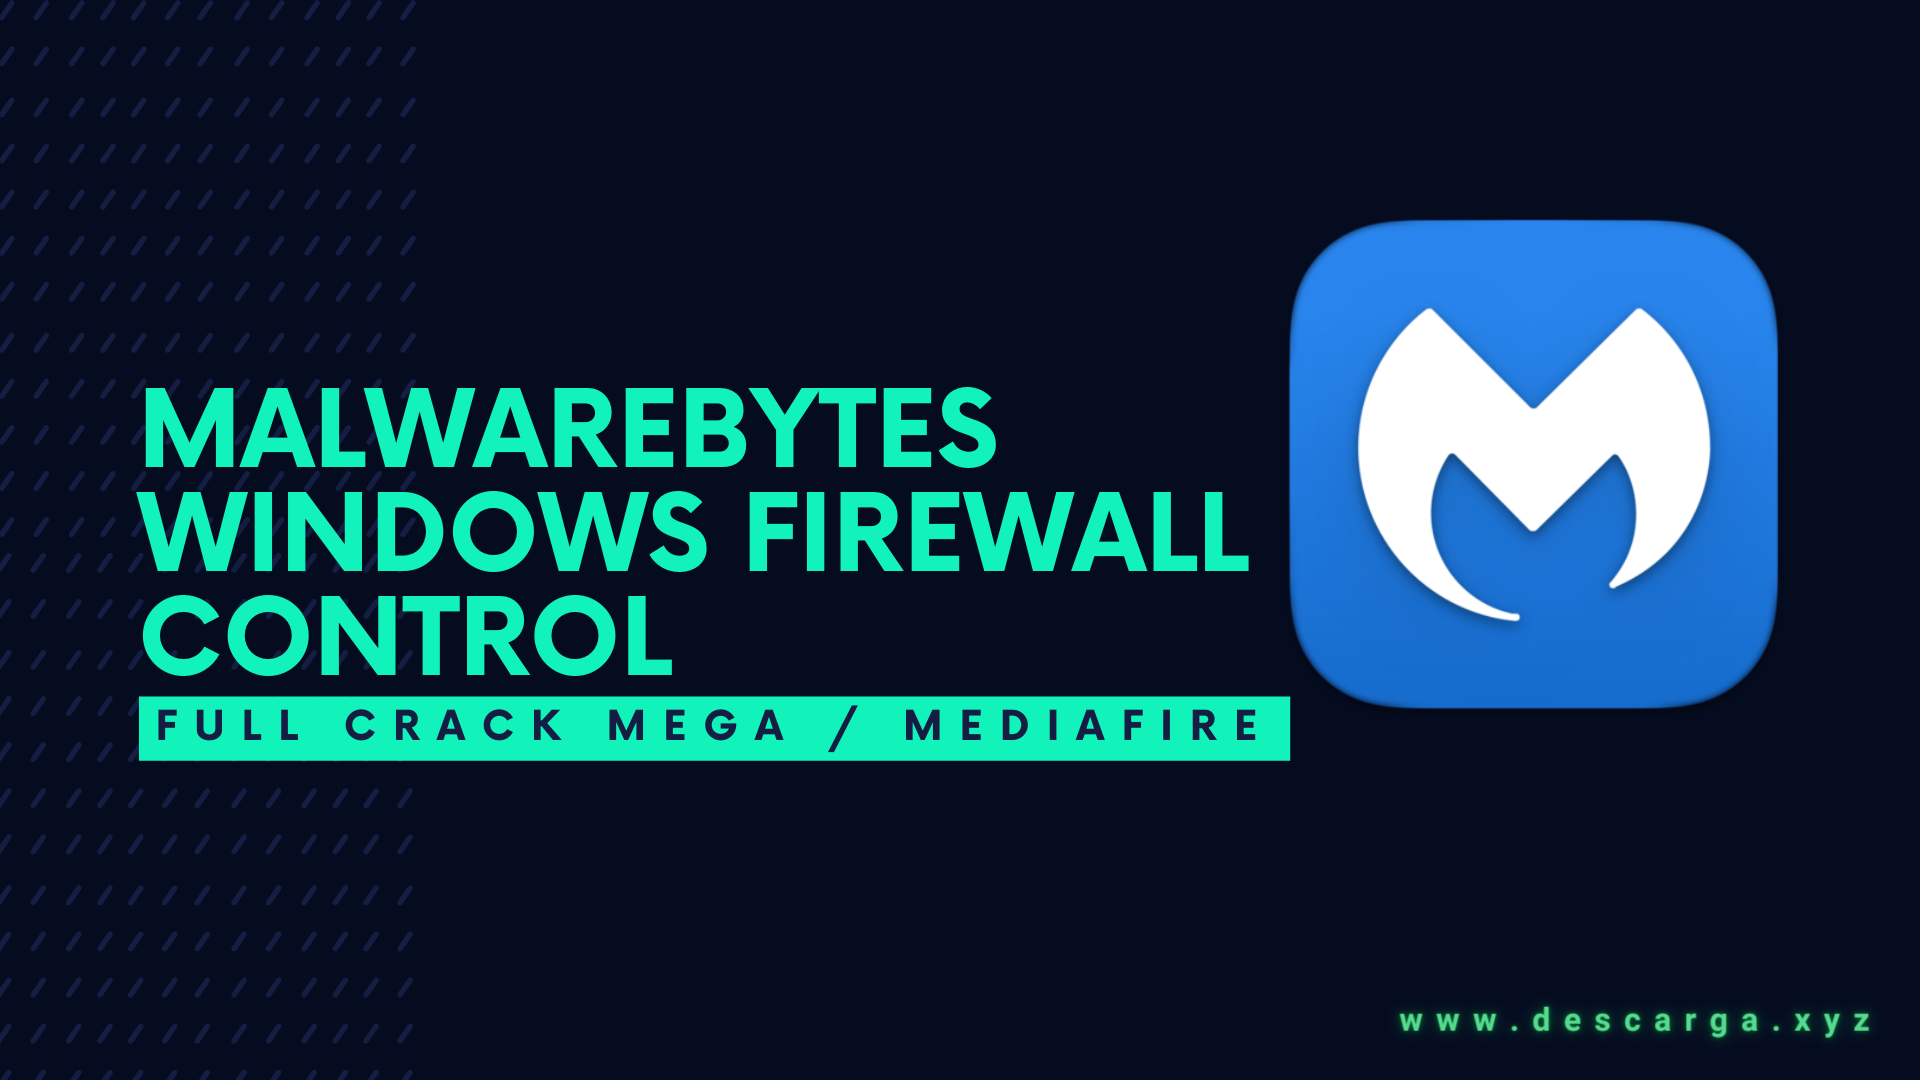 Malwarebytes Windows Firewall Control Full Crack Descargar Gratis por Mega